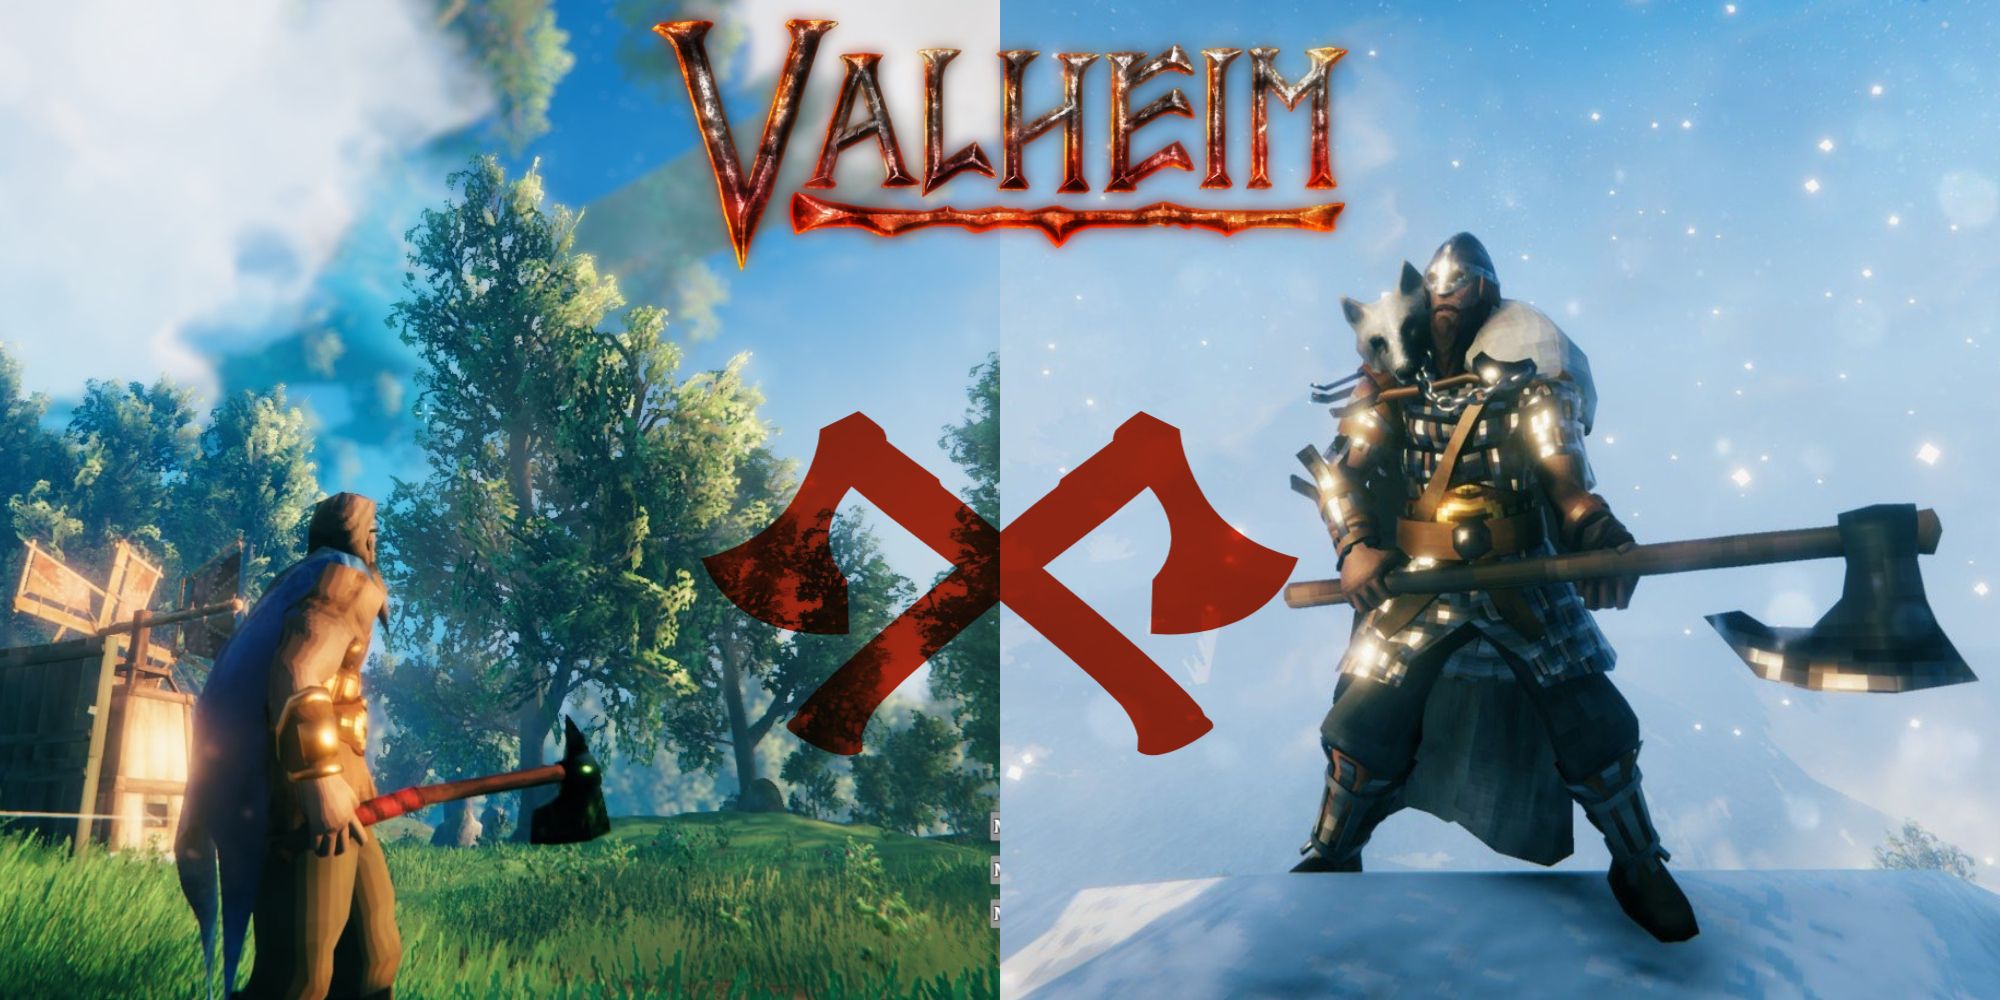 Valheim art of players using axes